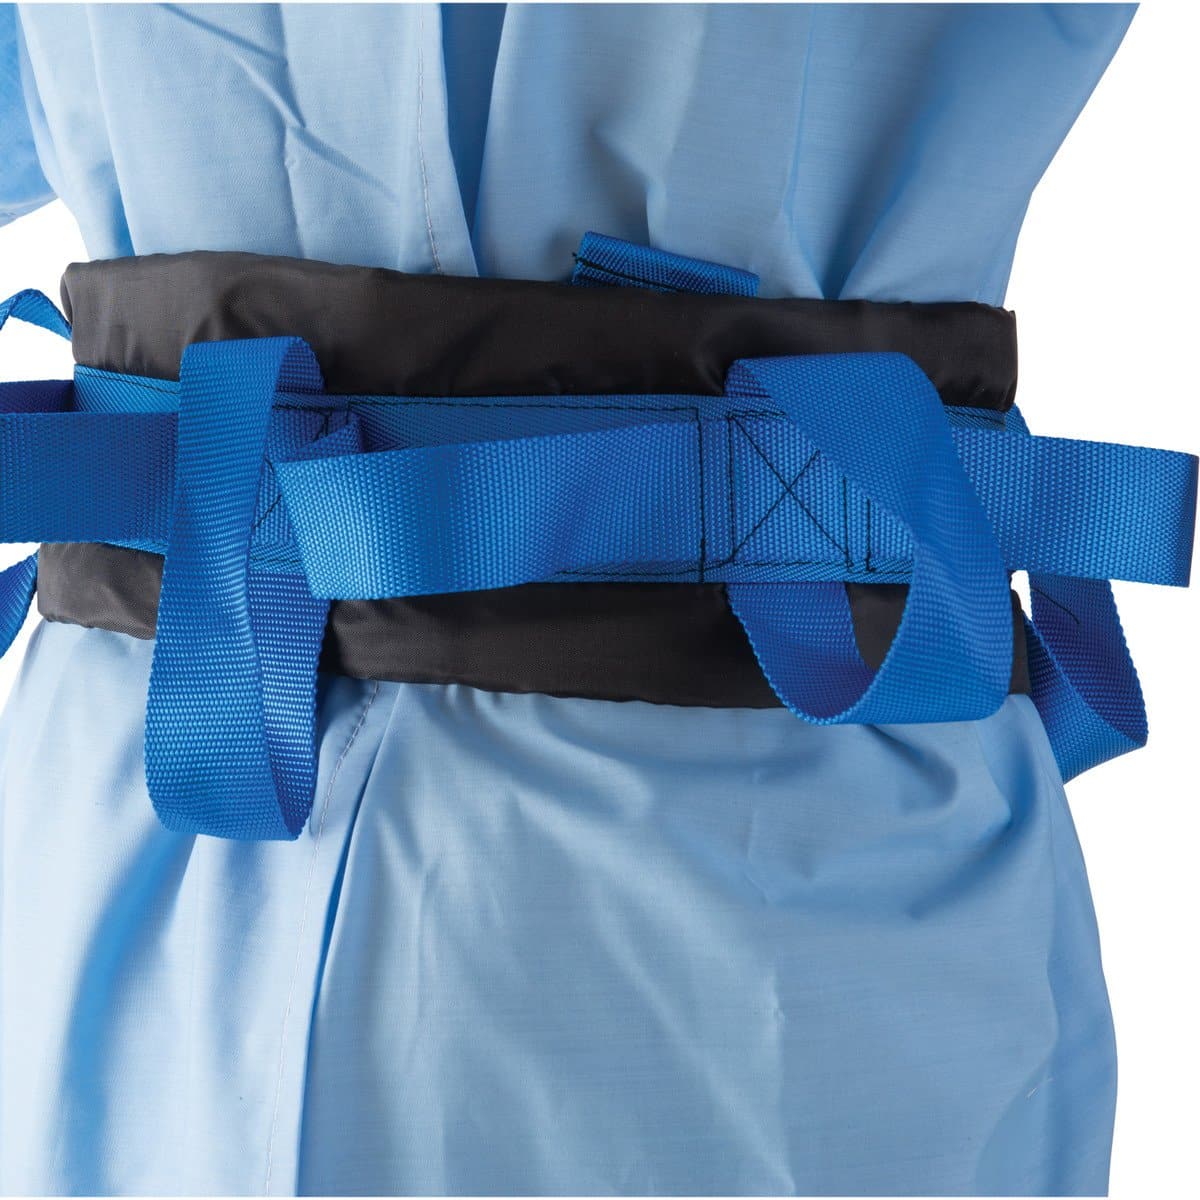 DMI Deluxe Adjustable Nylon Transfer Gait Belt With Handles & Buckle - Senior.com Gait Belts